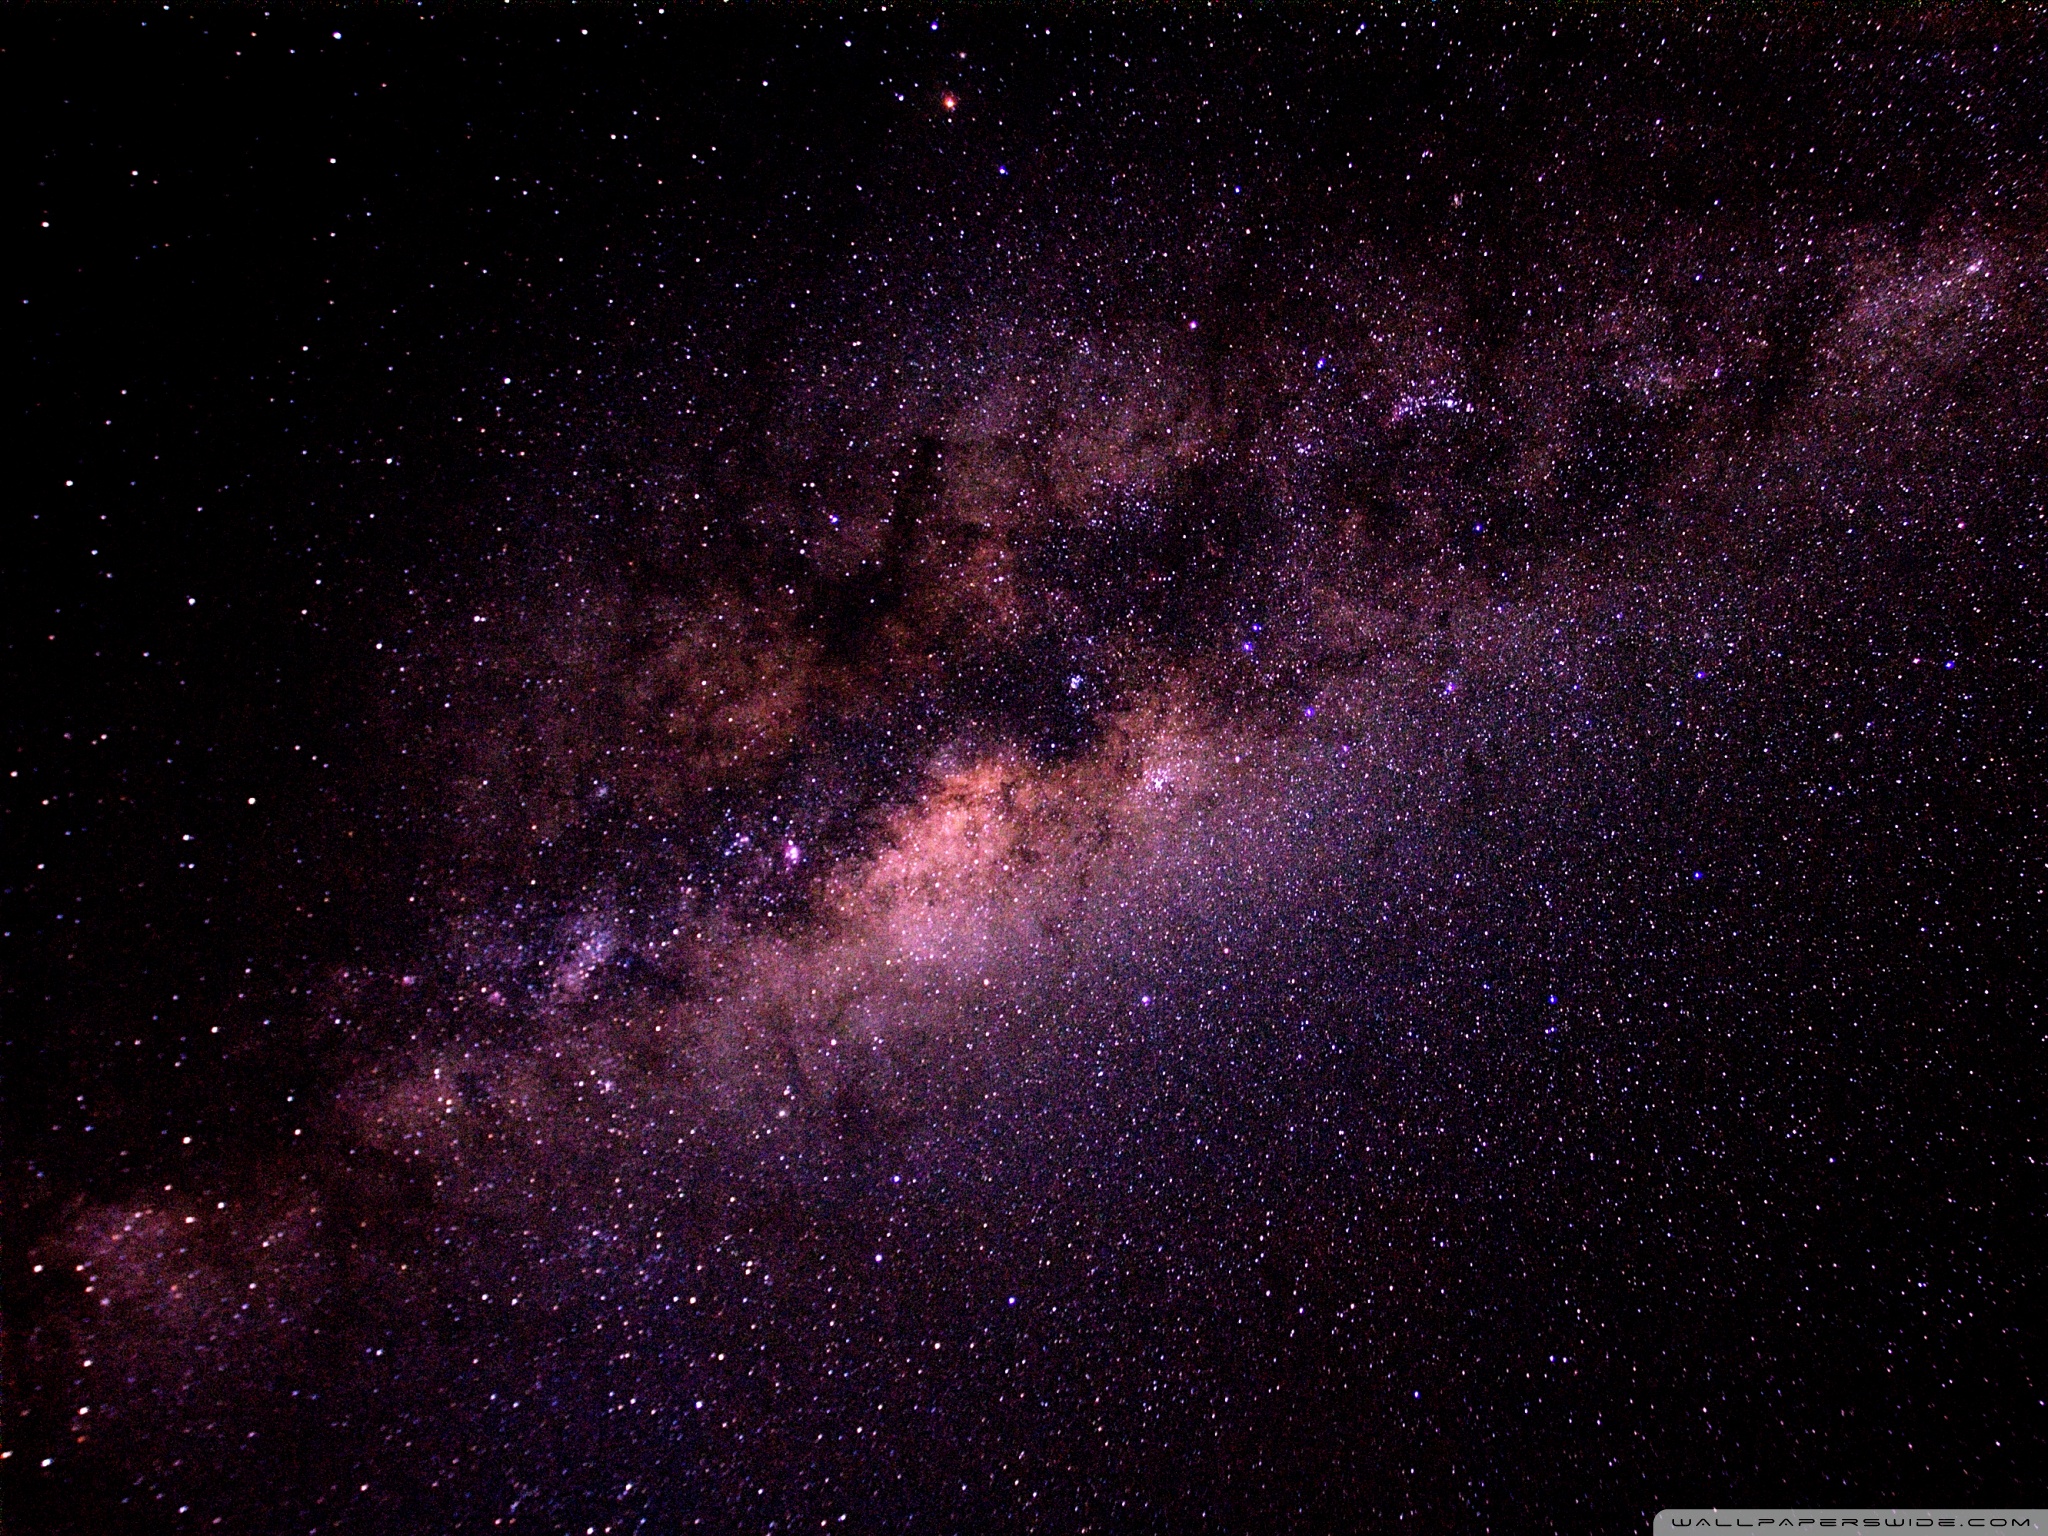 Milky Way Galaxy Ultra Hd Desktop Background Wallpaper For 4k Uhd Tv Widescreen Ultrawide Desktop Laptop Tablet Smartphone